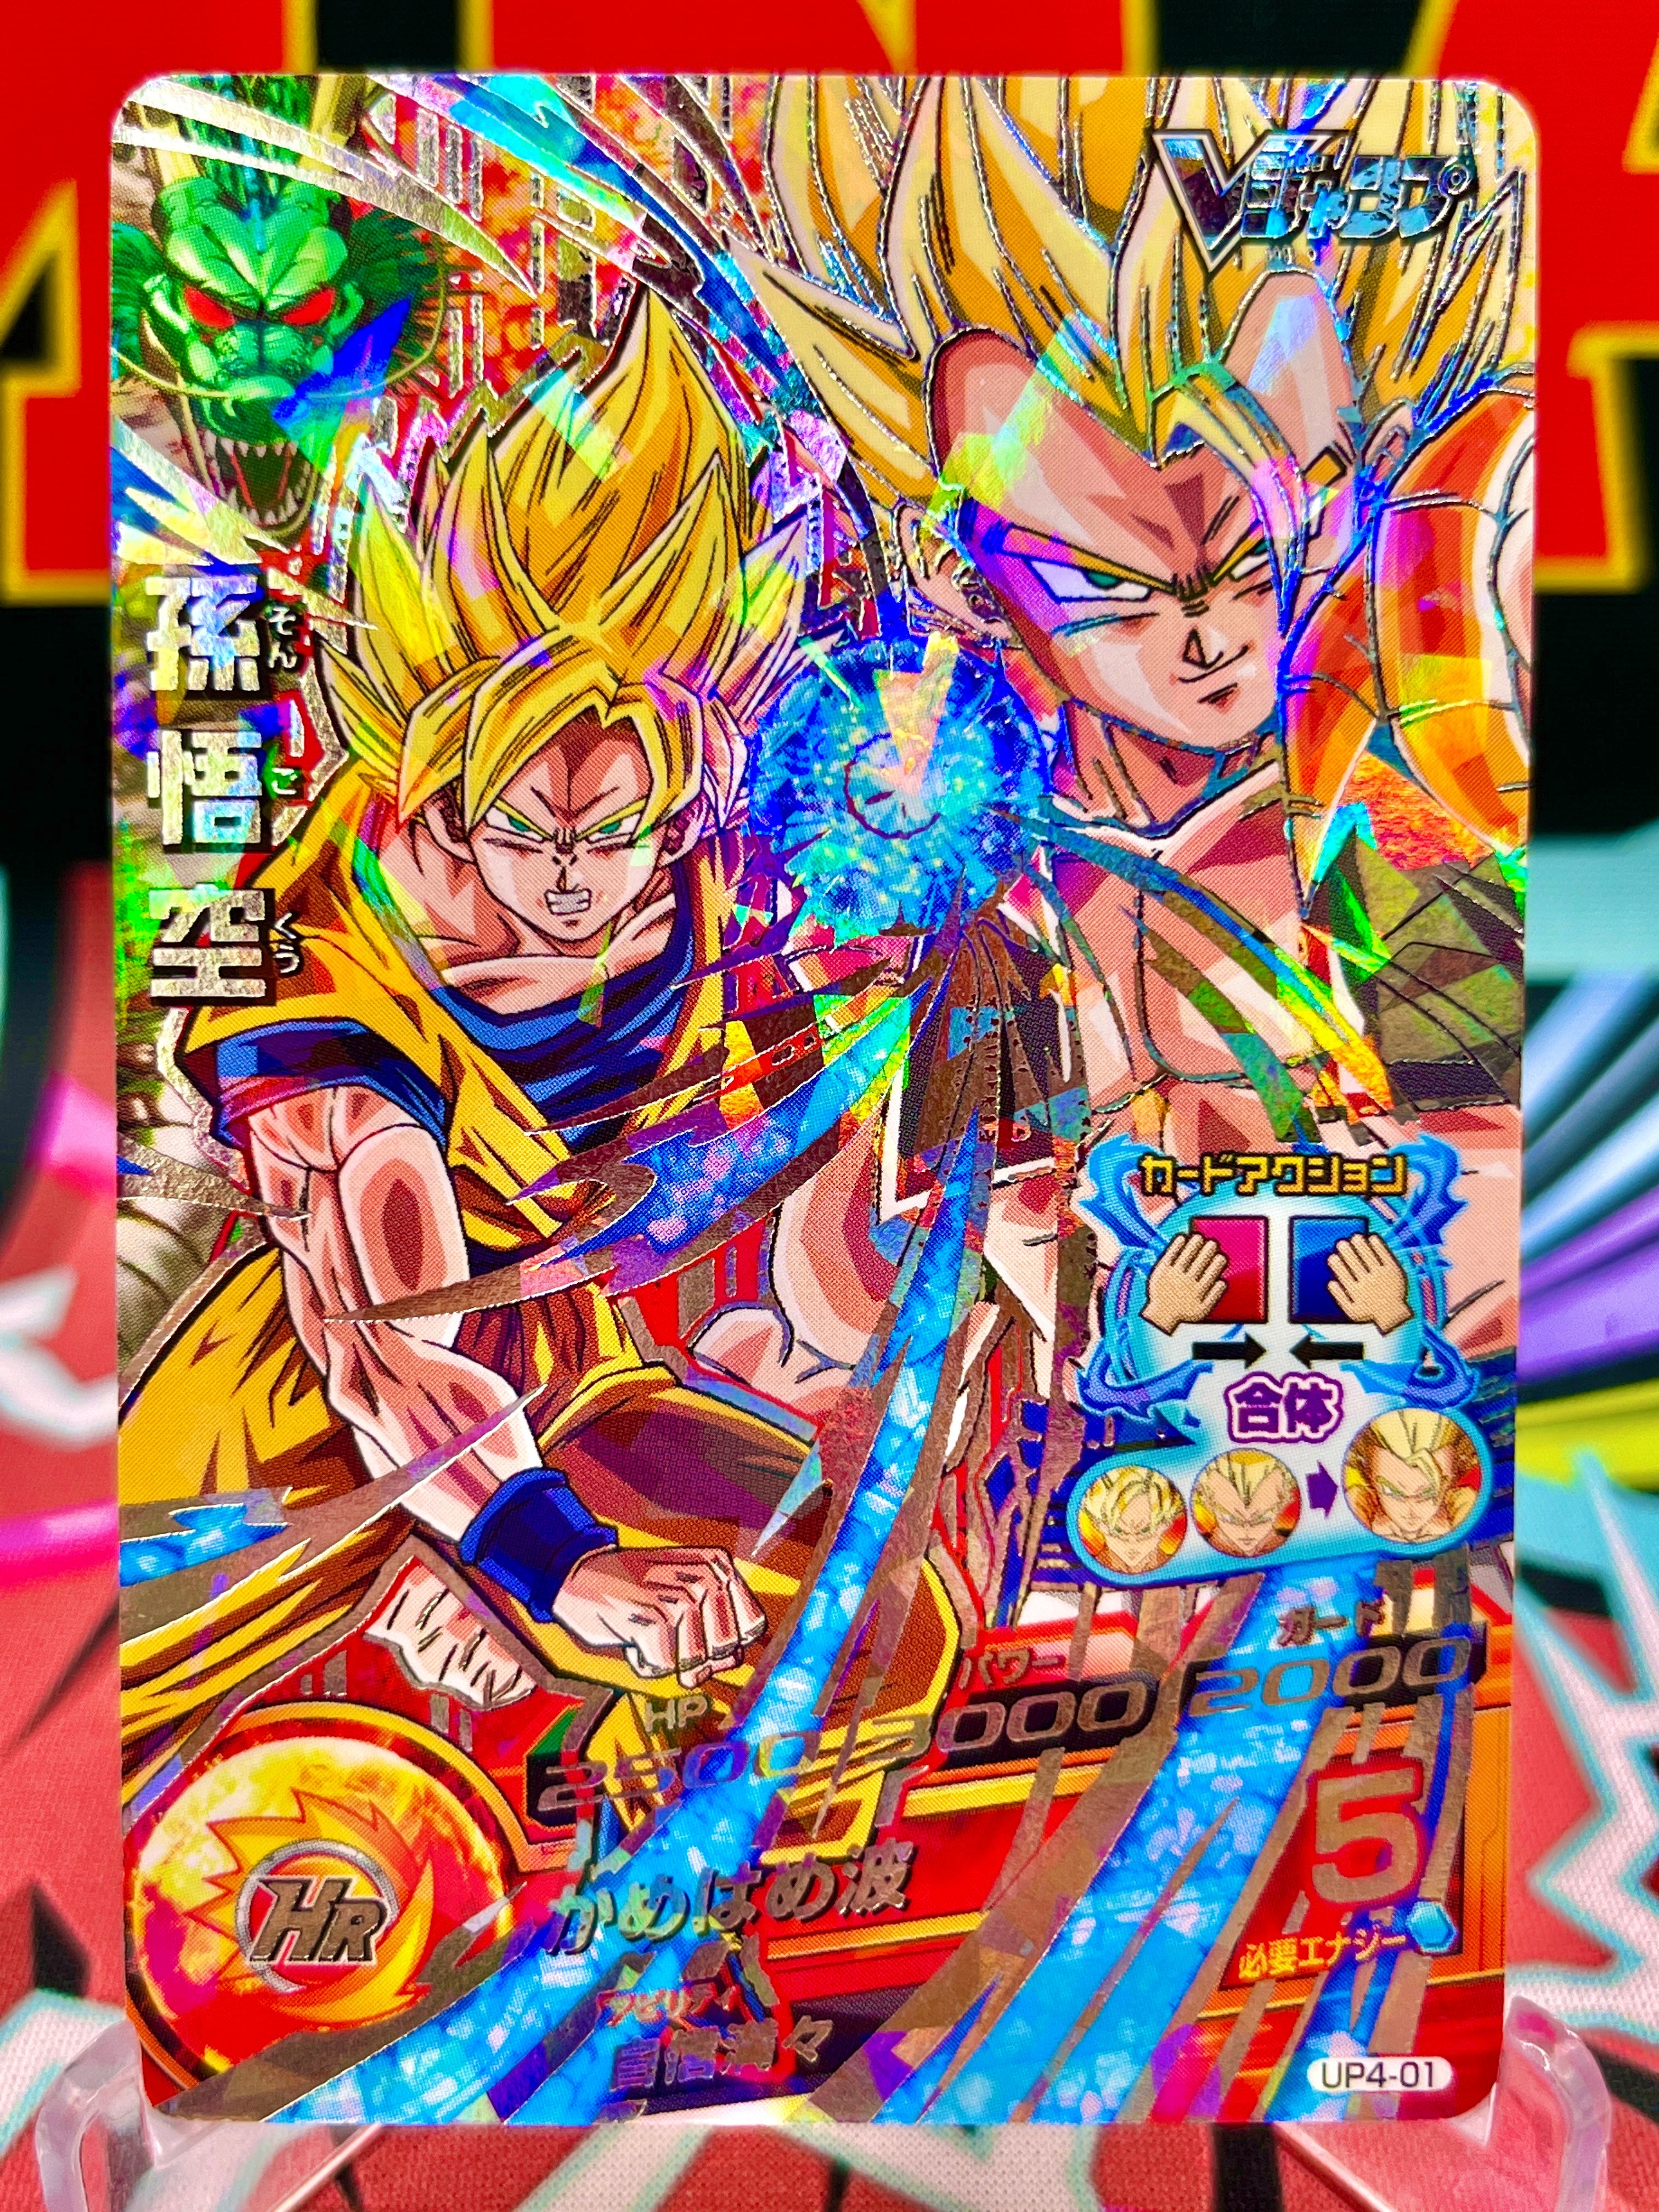 UP4-01 Son Goku & Gogeta Vintage (VJump) Promo (2014)